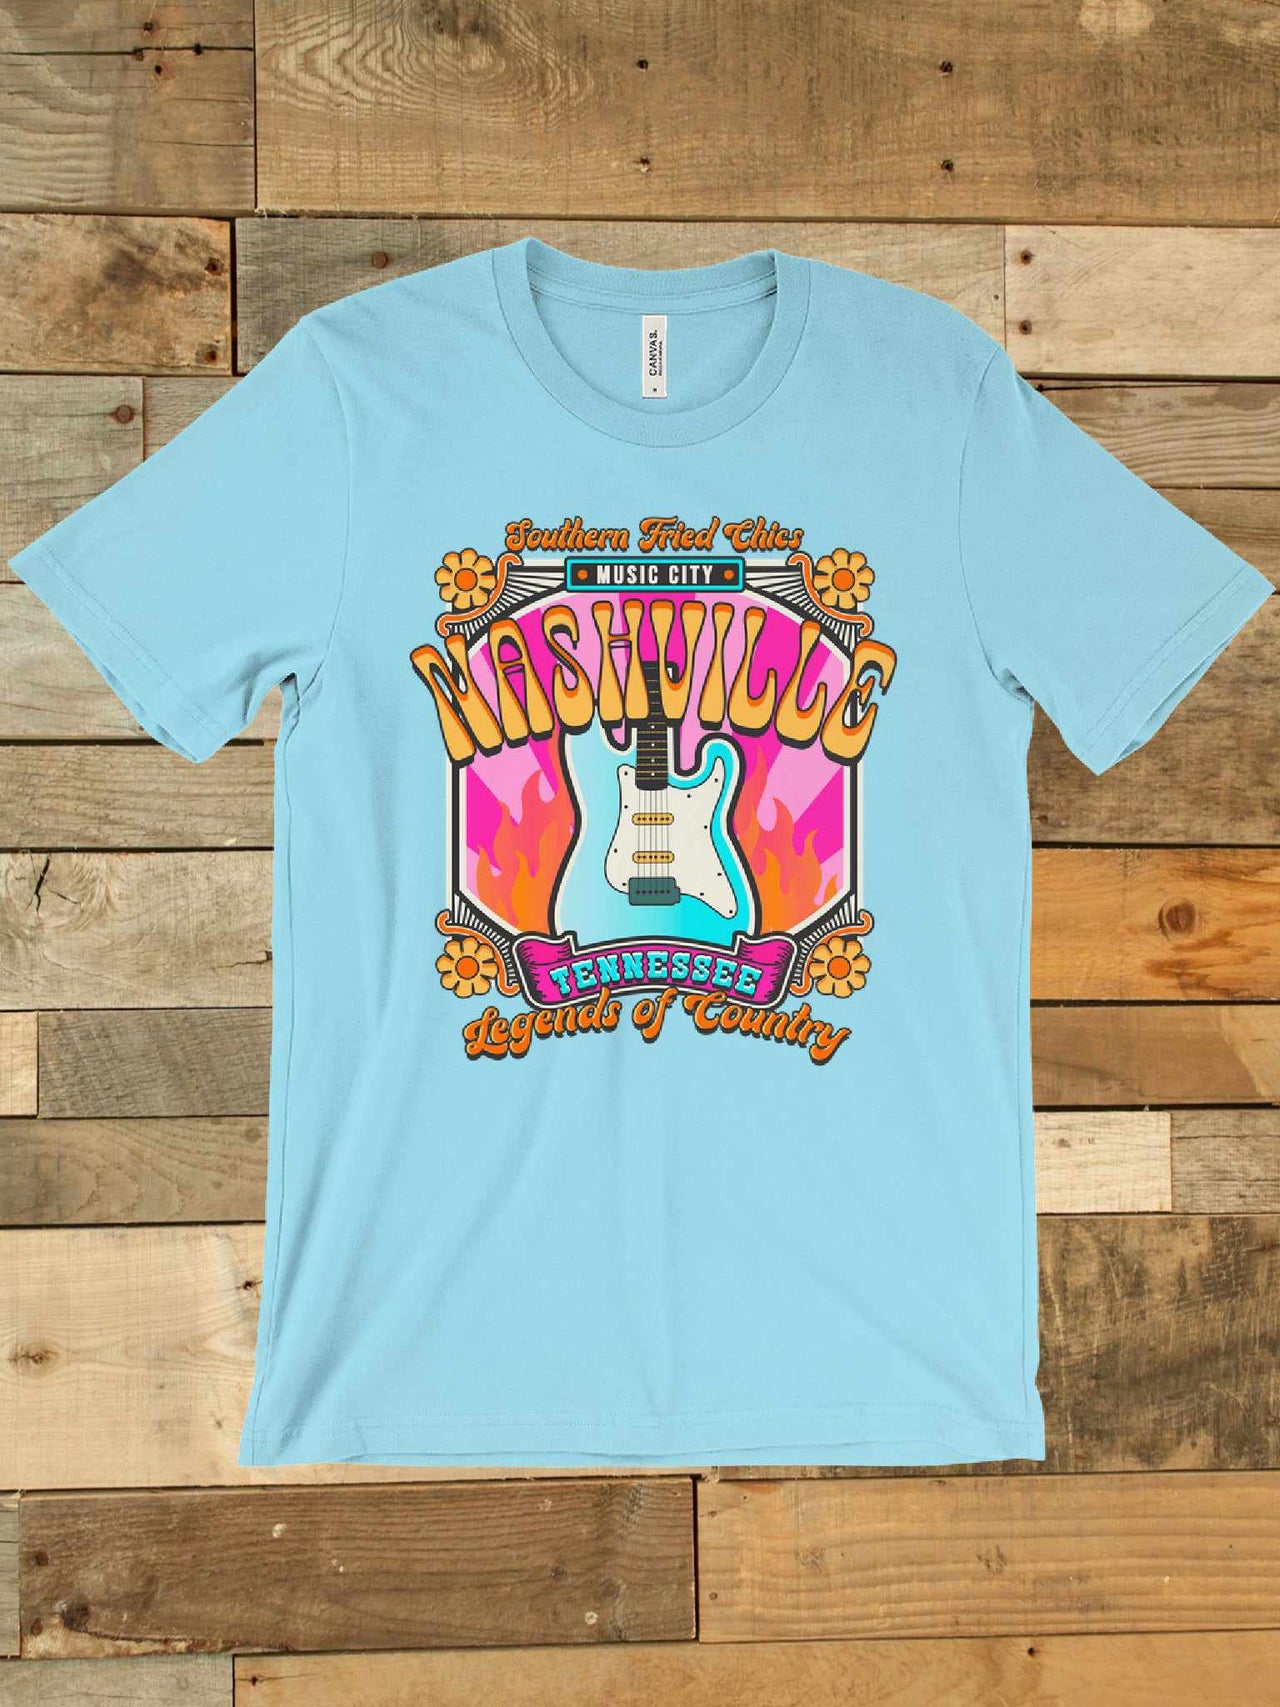 Nashville Music City T shirt